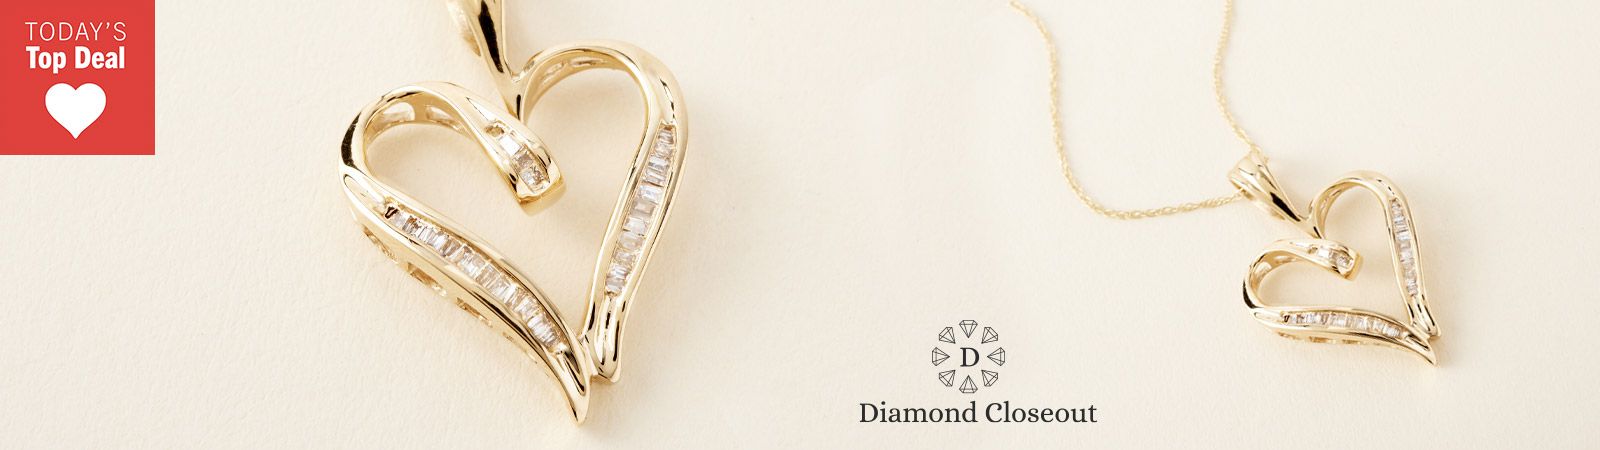 211-057 CLOSEOUT 14K White Gold 0.50ctw Diamond Stud Earrings, 1.7 grams